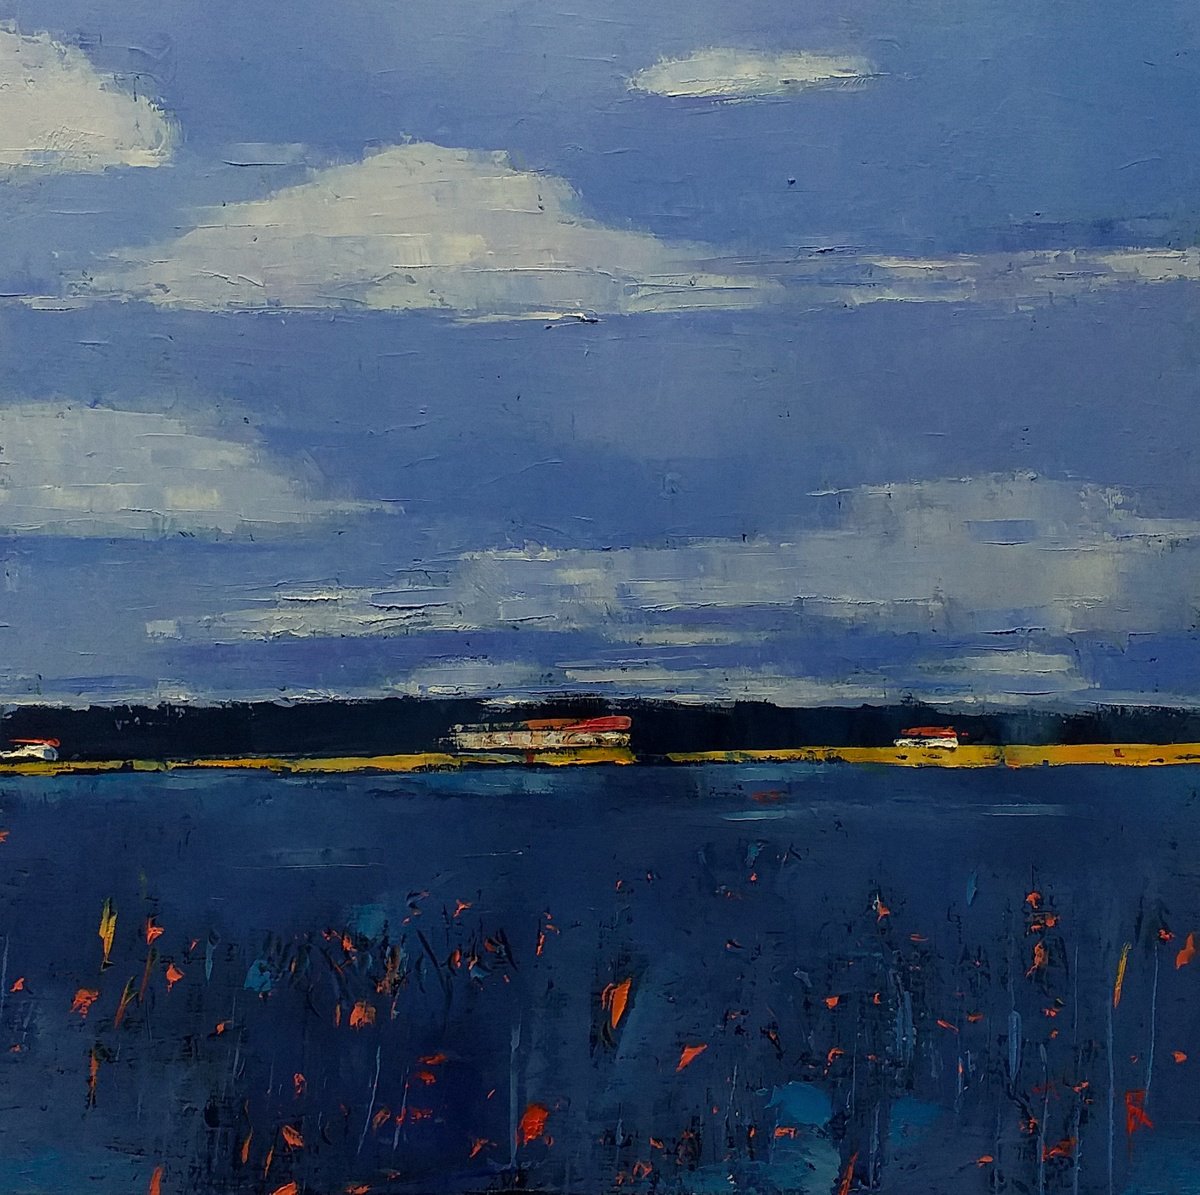 Blue Landscape 1 by Kestutis Jauniskis